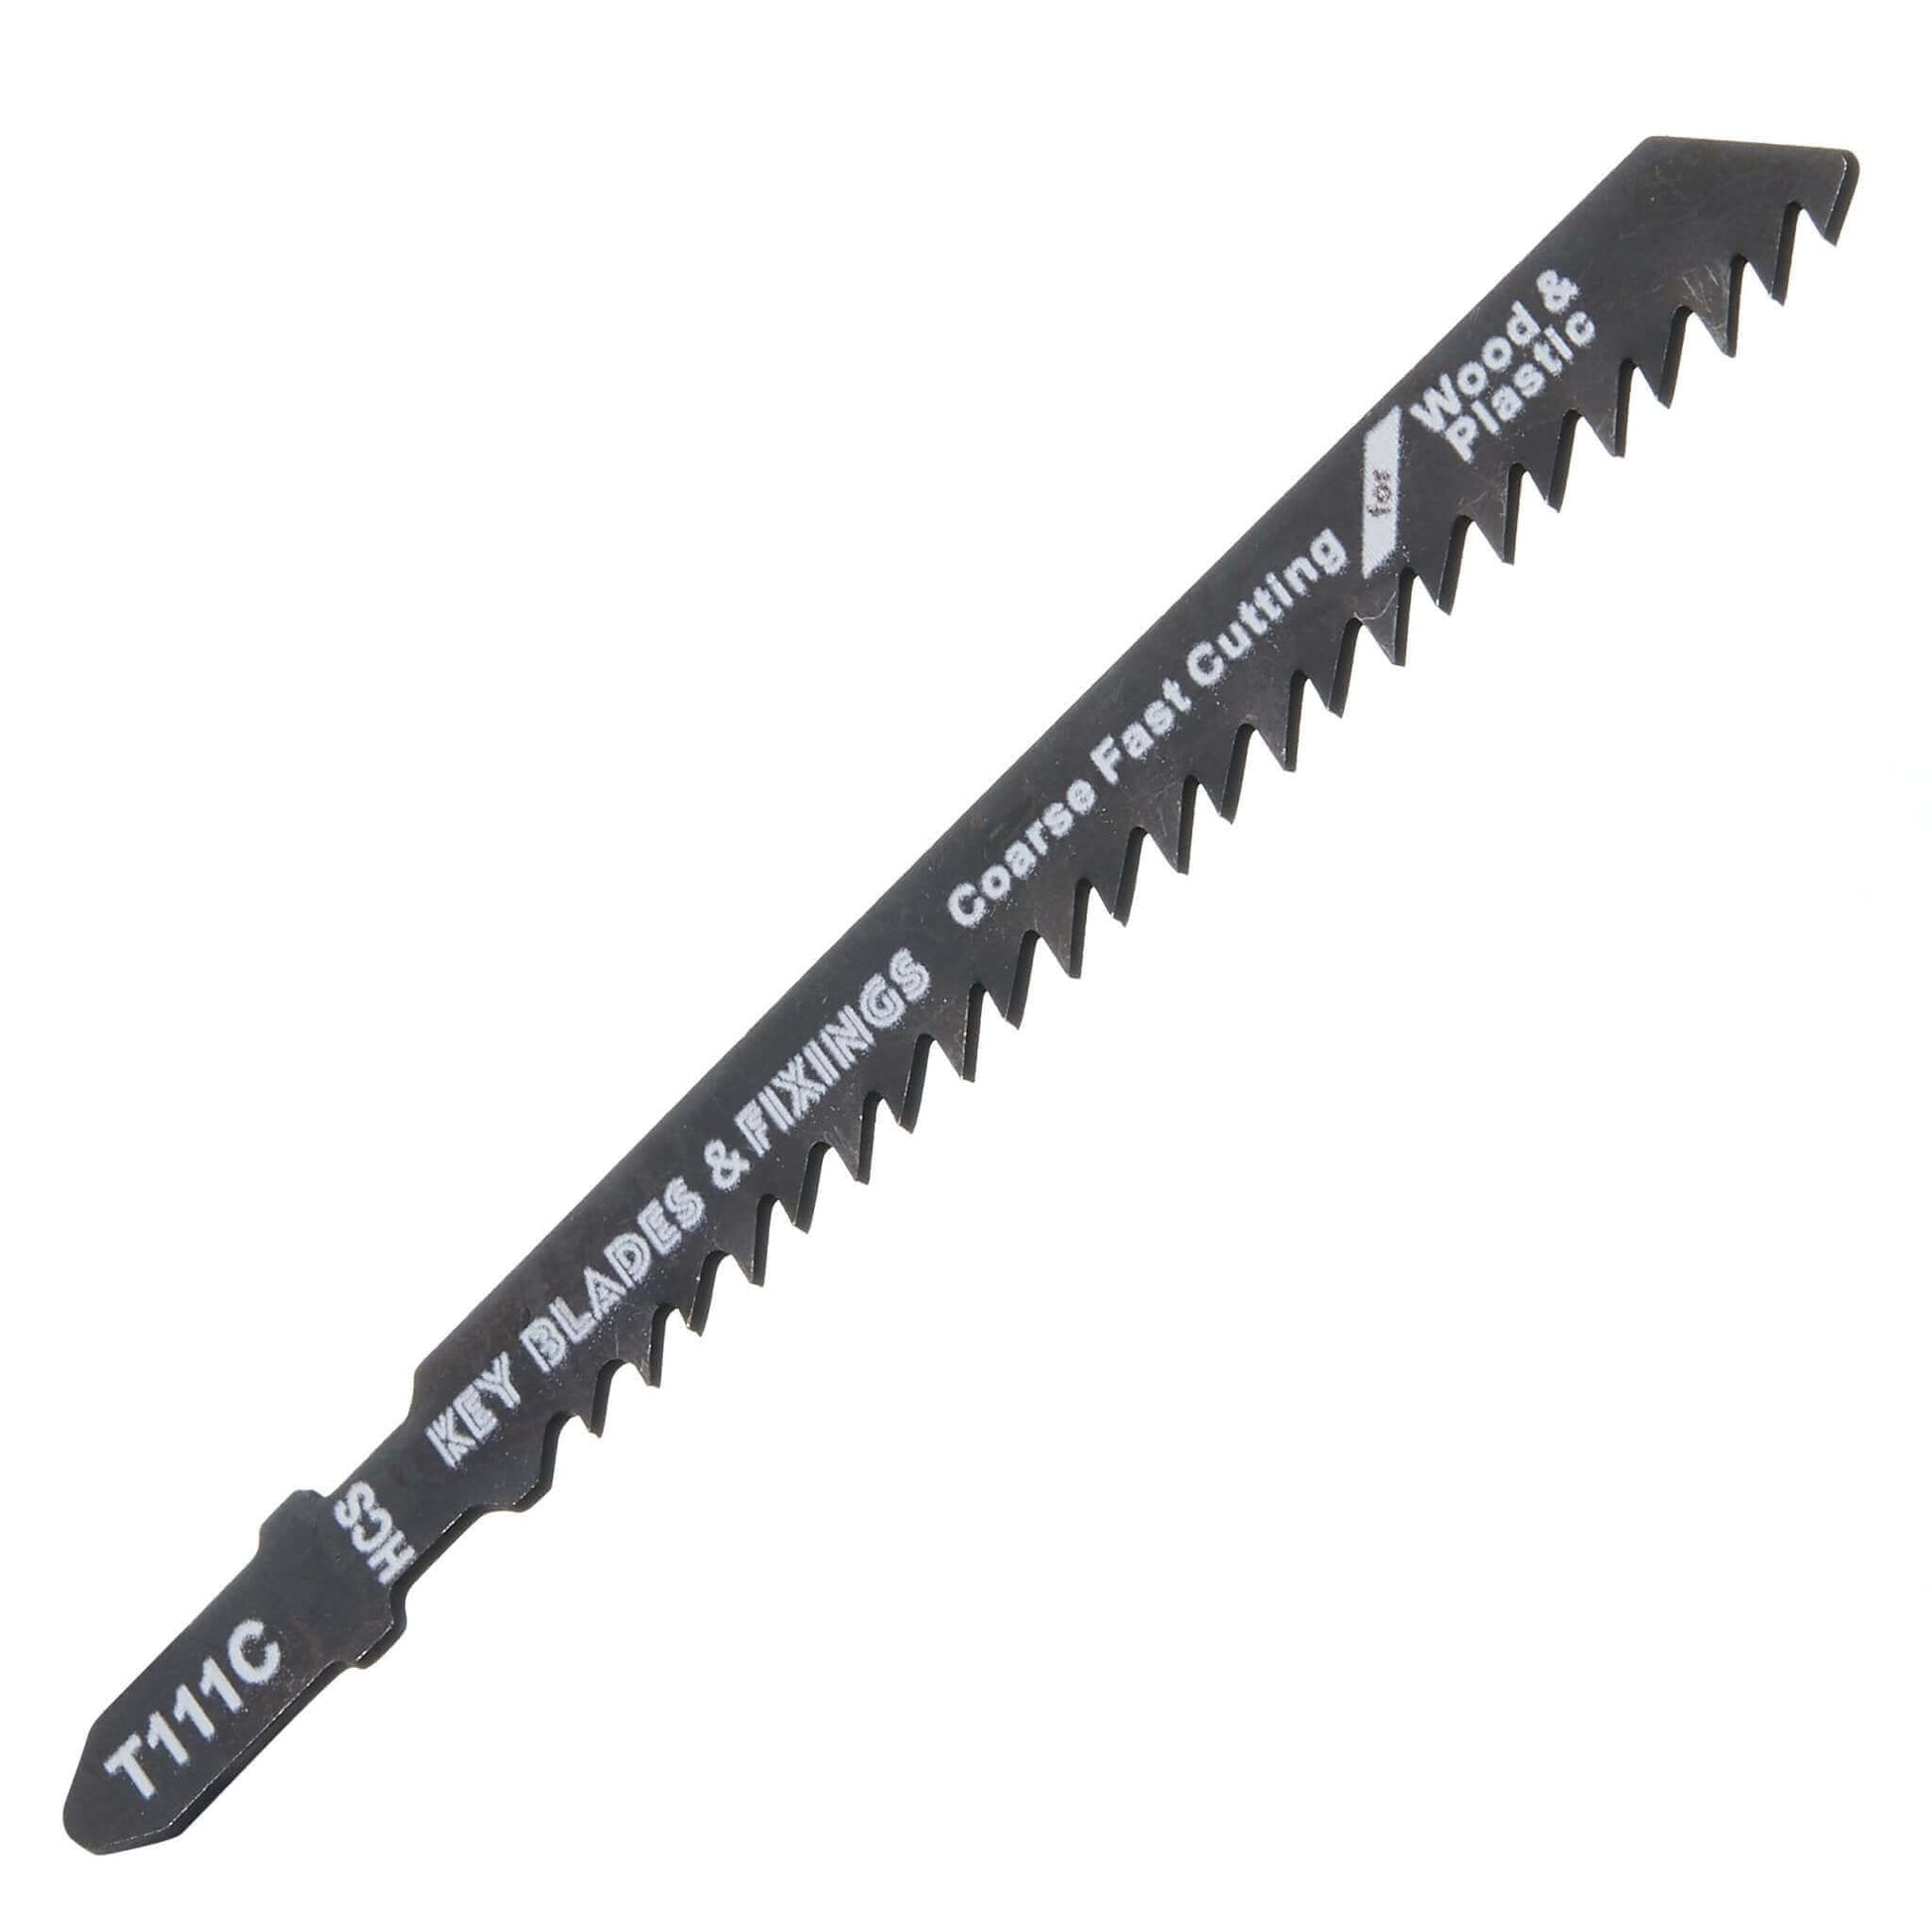 Key Blades T111C Jigsaw Blades 5 Pack - 1133 -  Shop Key Blades & Fixings | Workwear, Power tools & hand tools online - Key Blades & Fixings Ltd